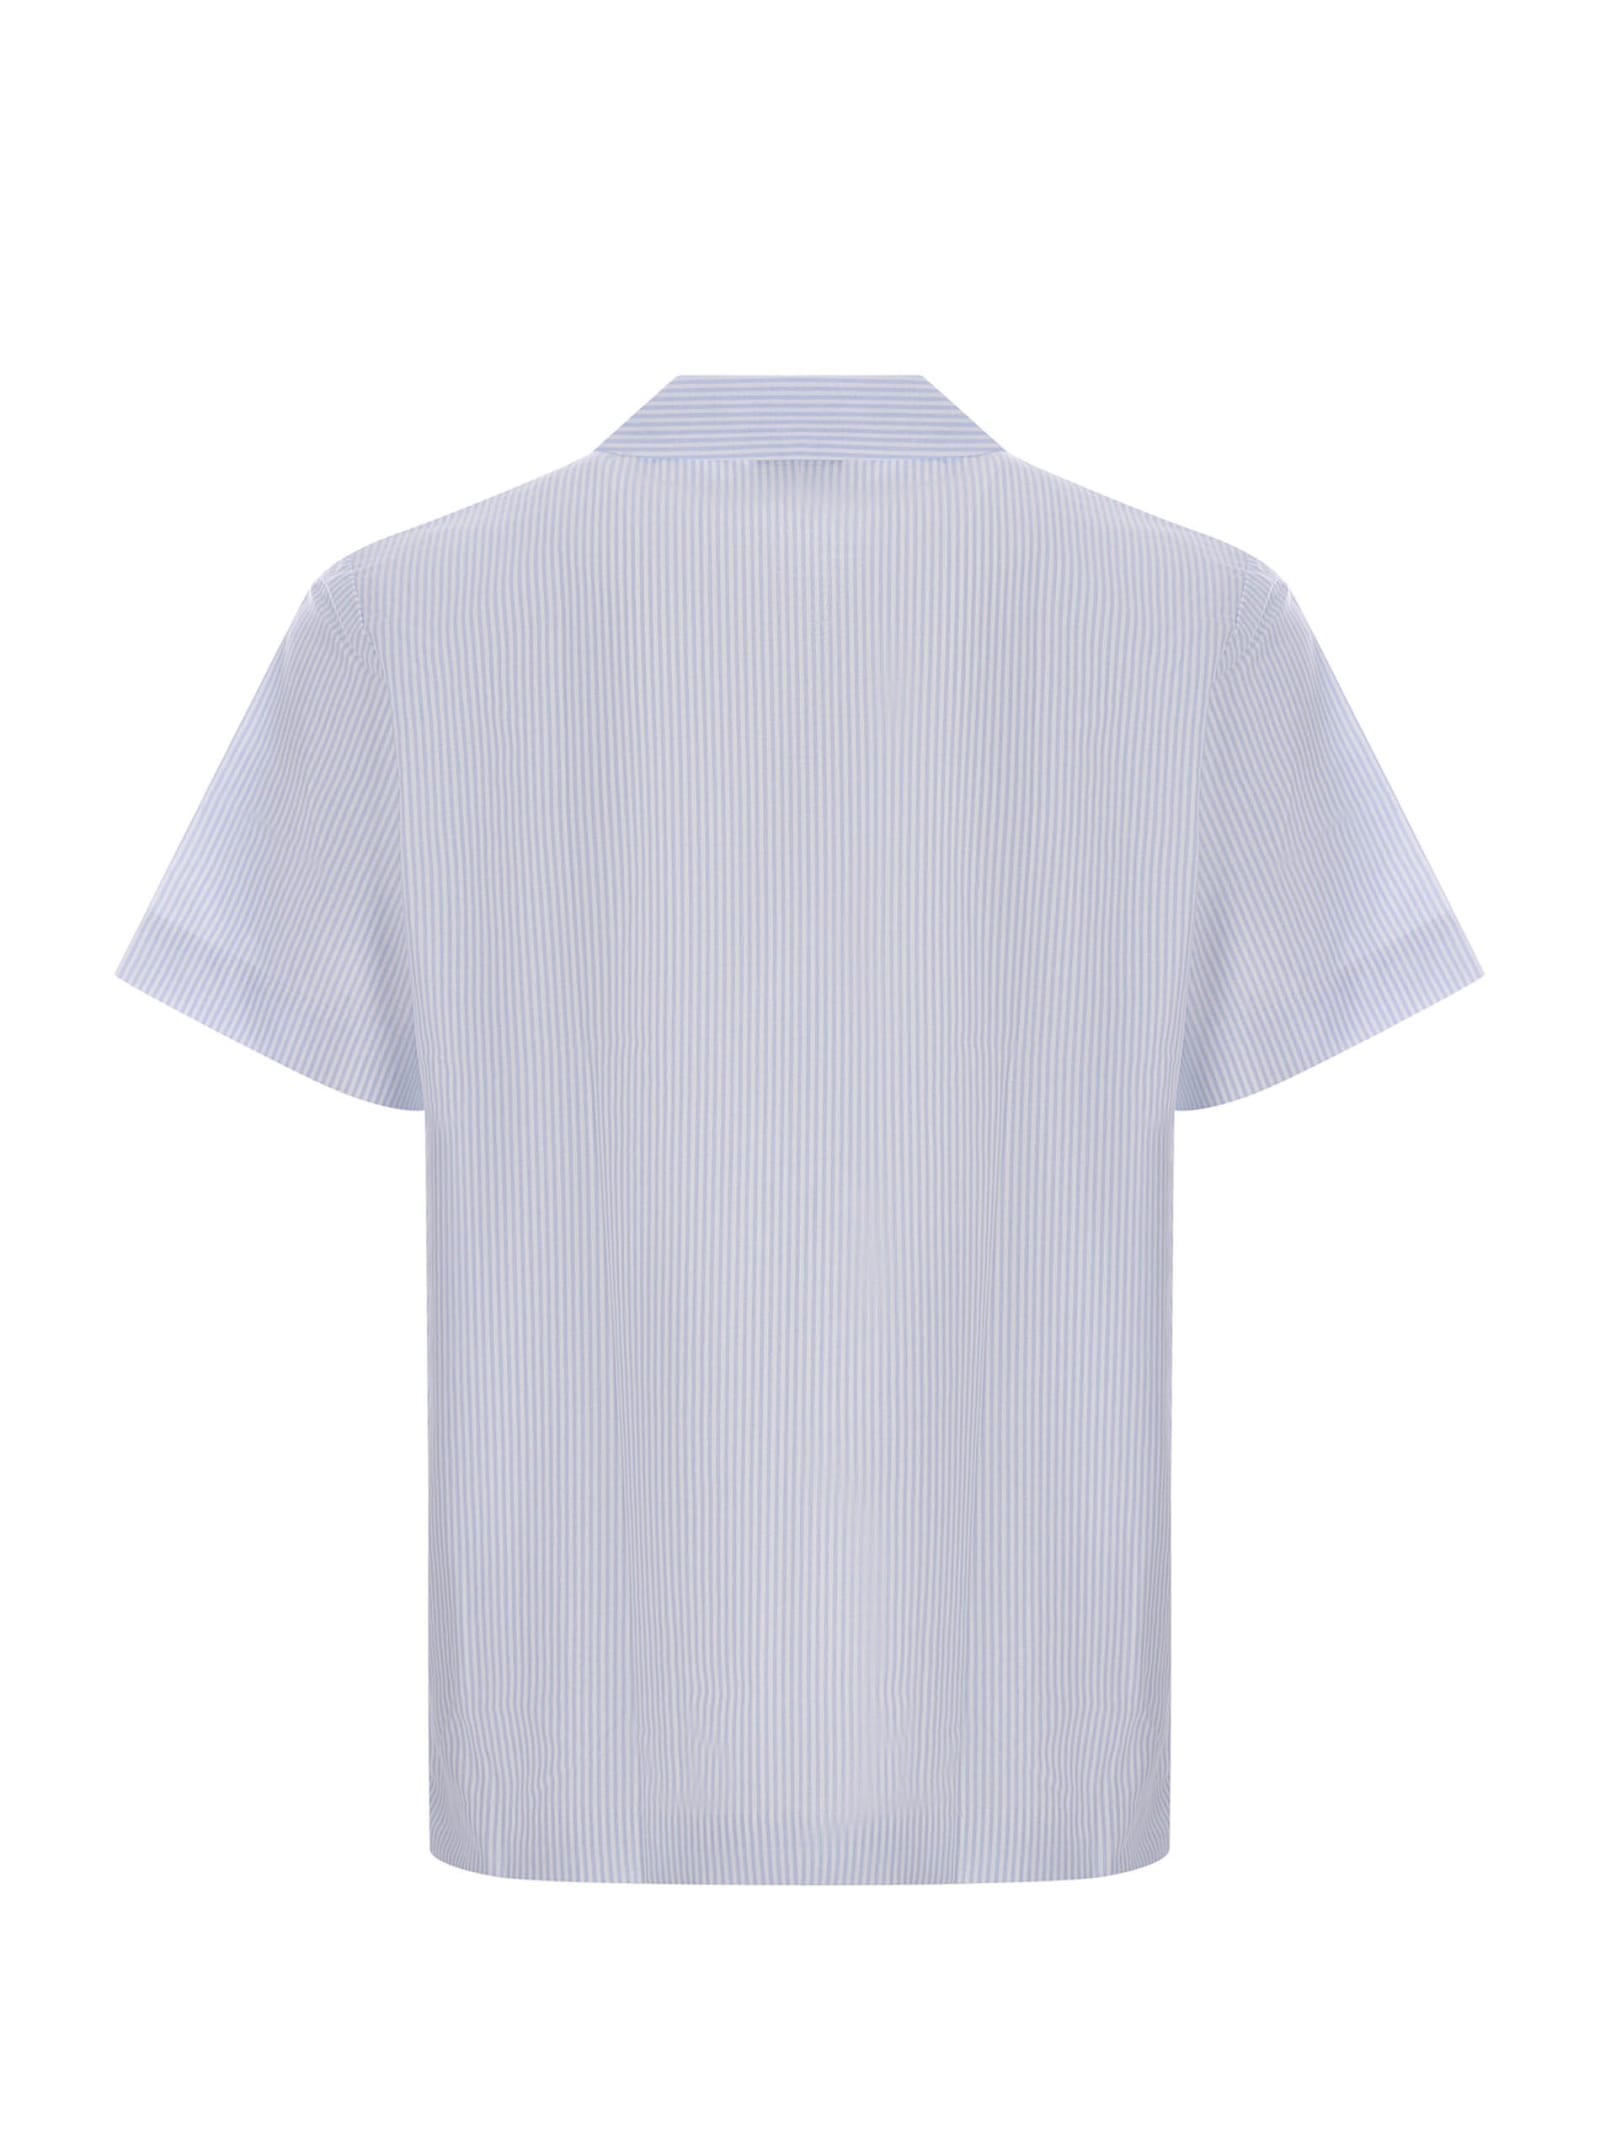 Shop Apc Shirt A.p.c. Lloyd Made Of Cotton In White